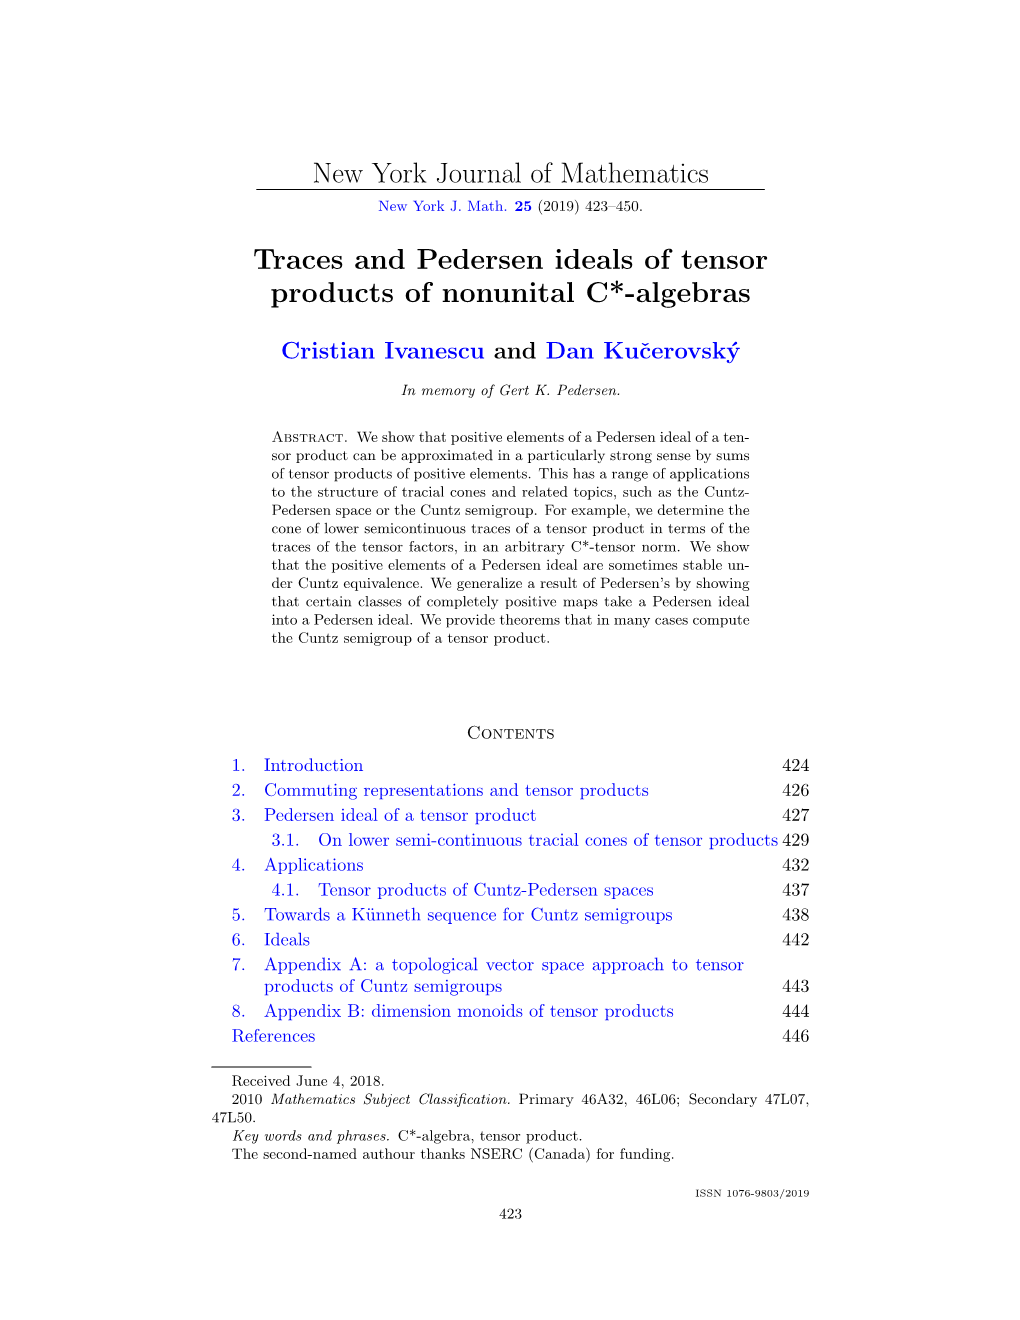 Pedersen Ideals of Tensor Products of Nonunital C*-Algebras